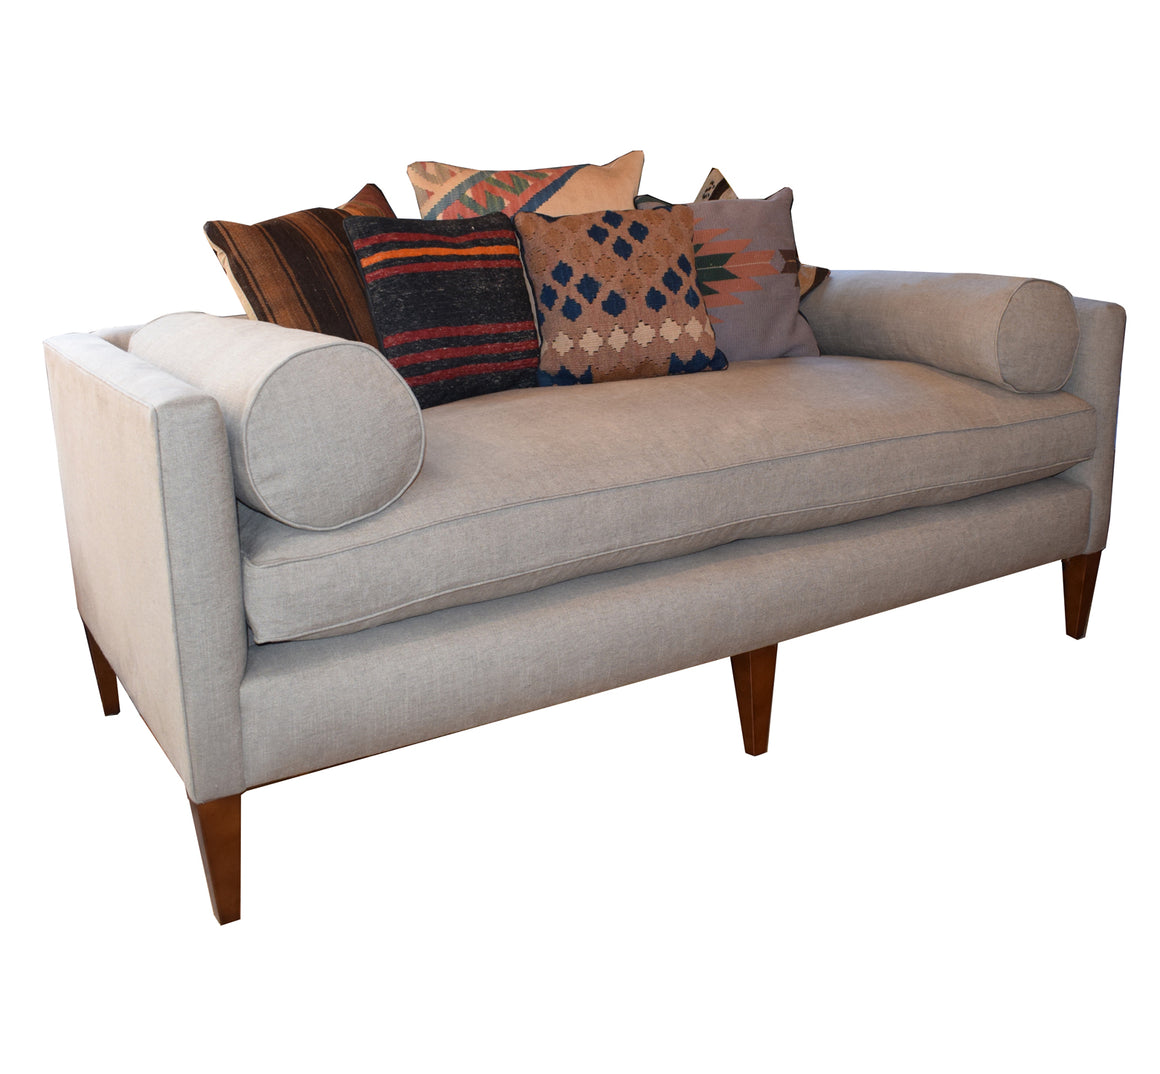 Kingston sofas in Linwood Linen HALF PRICE TO ORDER